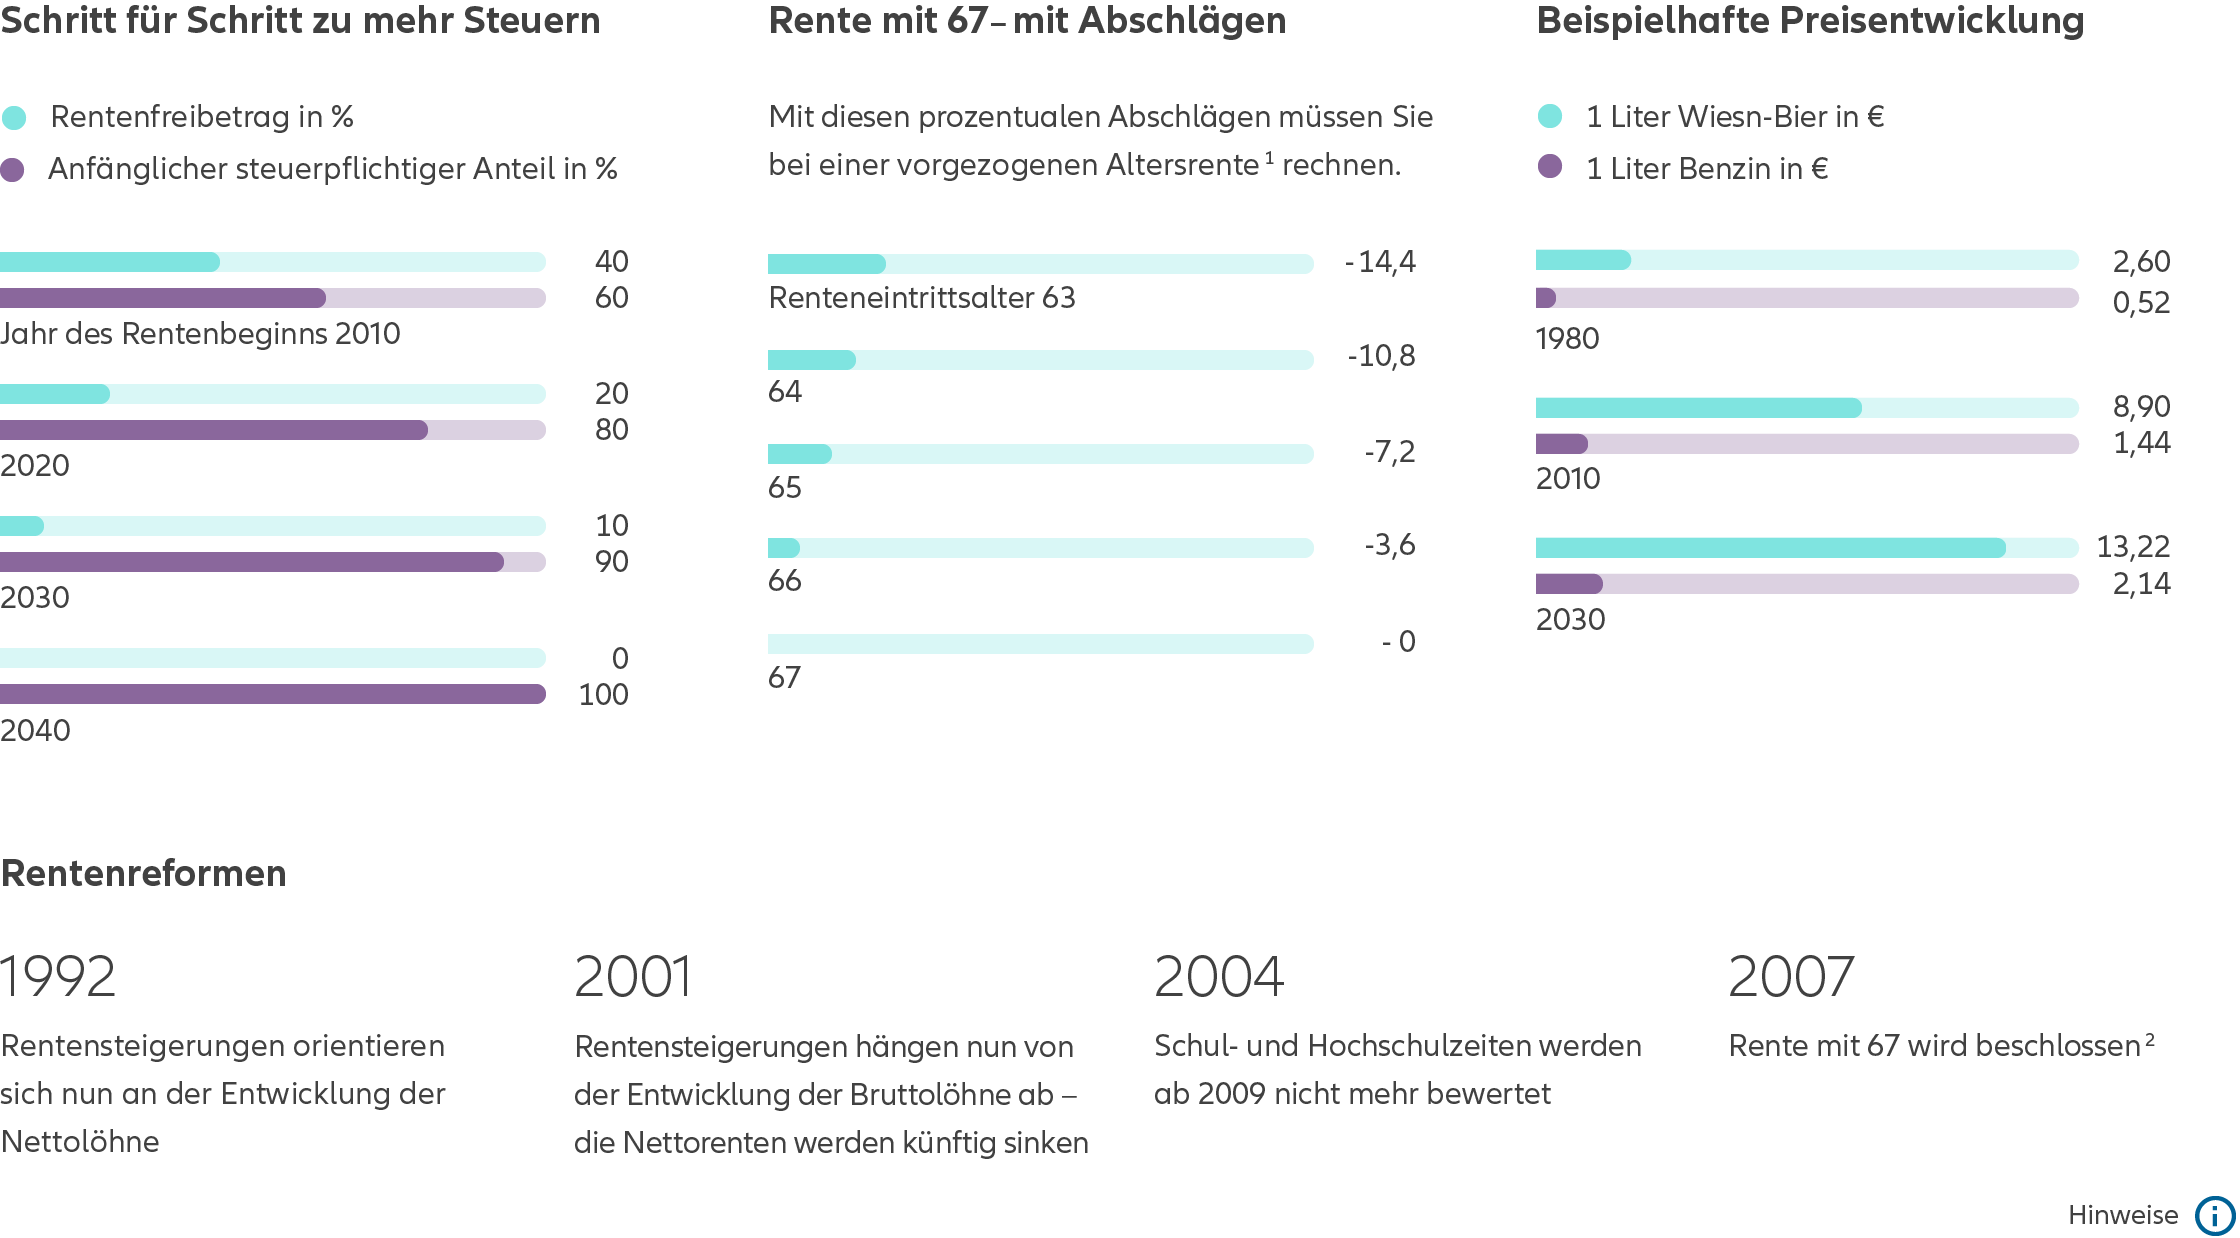 Allianz - Renteninformation: Infografik